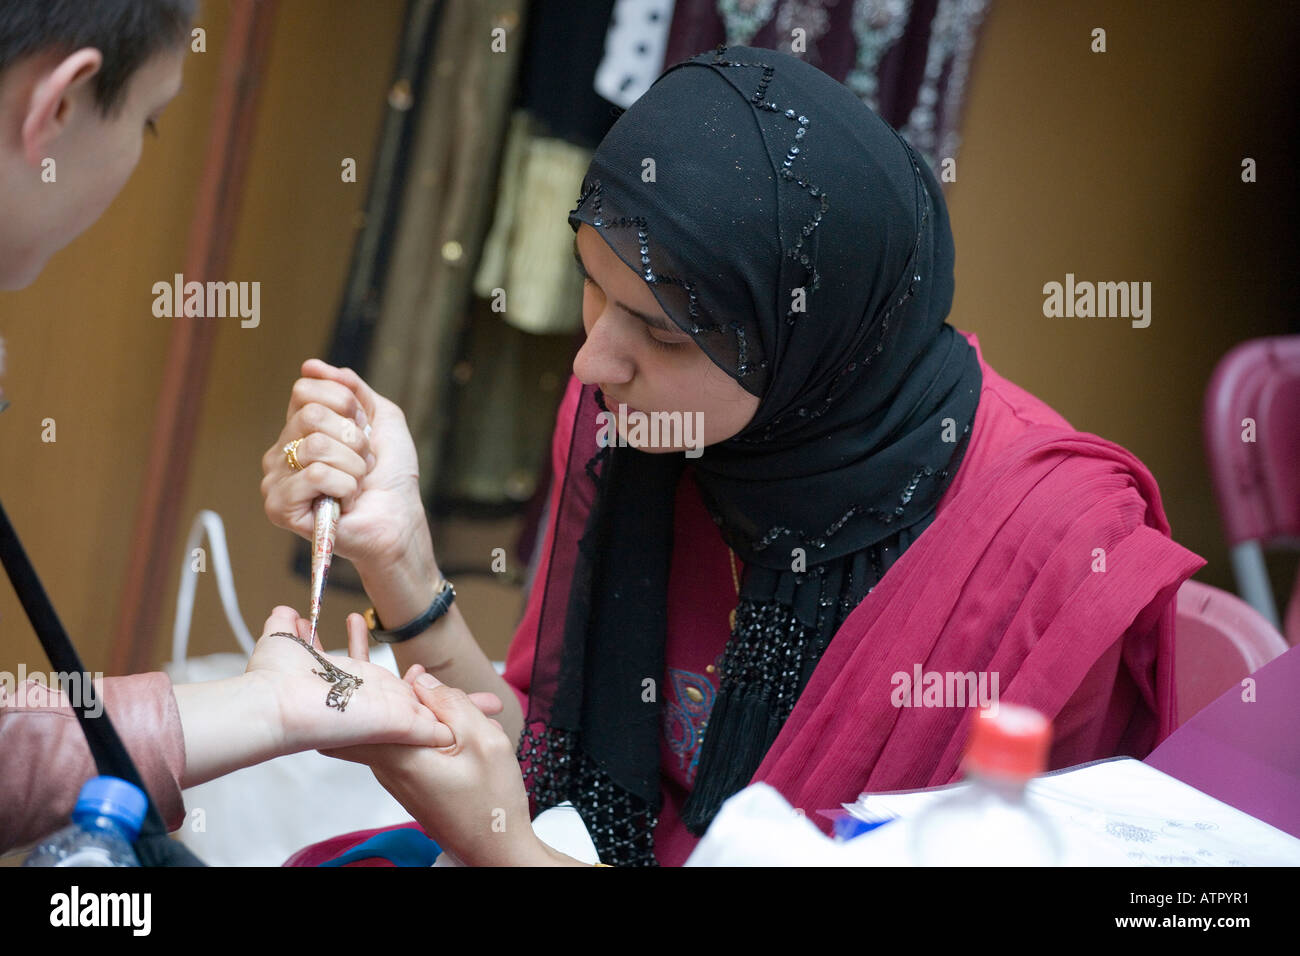 muslim woman applying henna tattoo Stock Photo